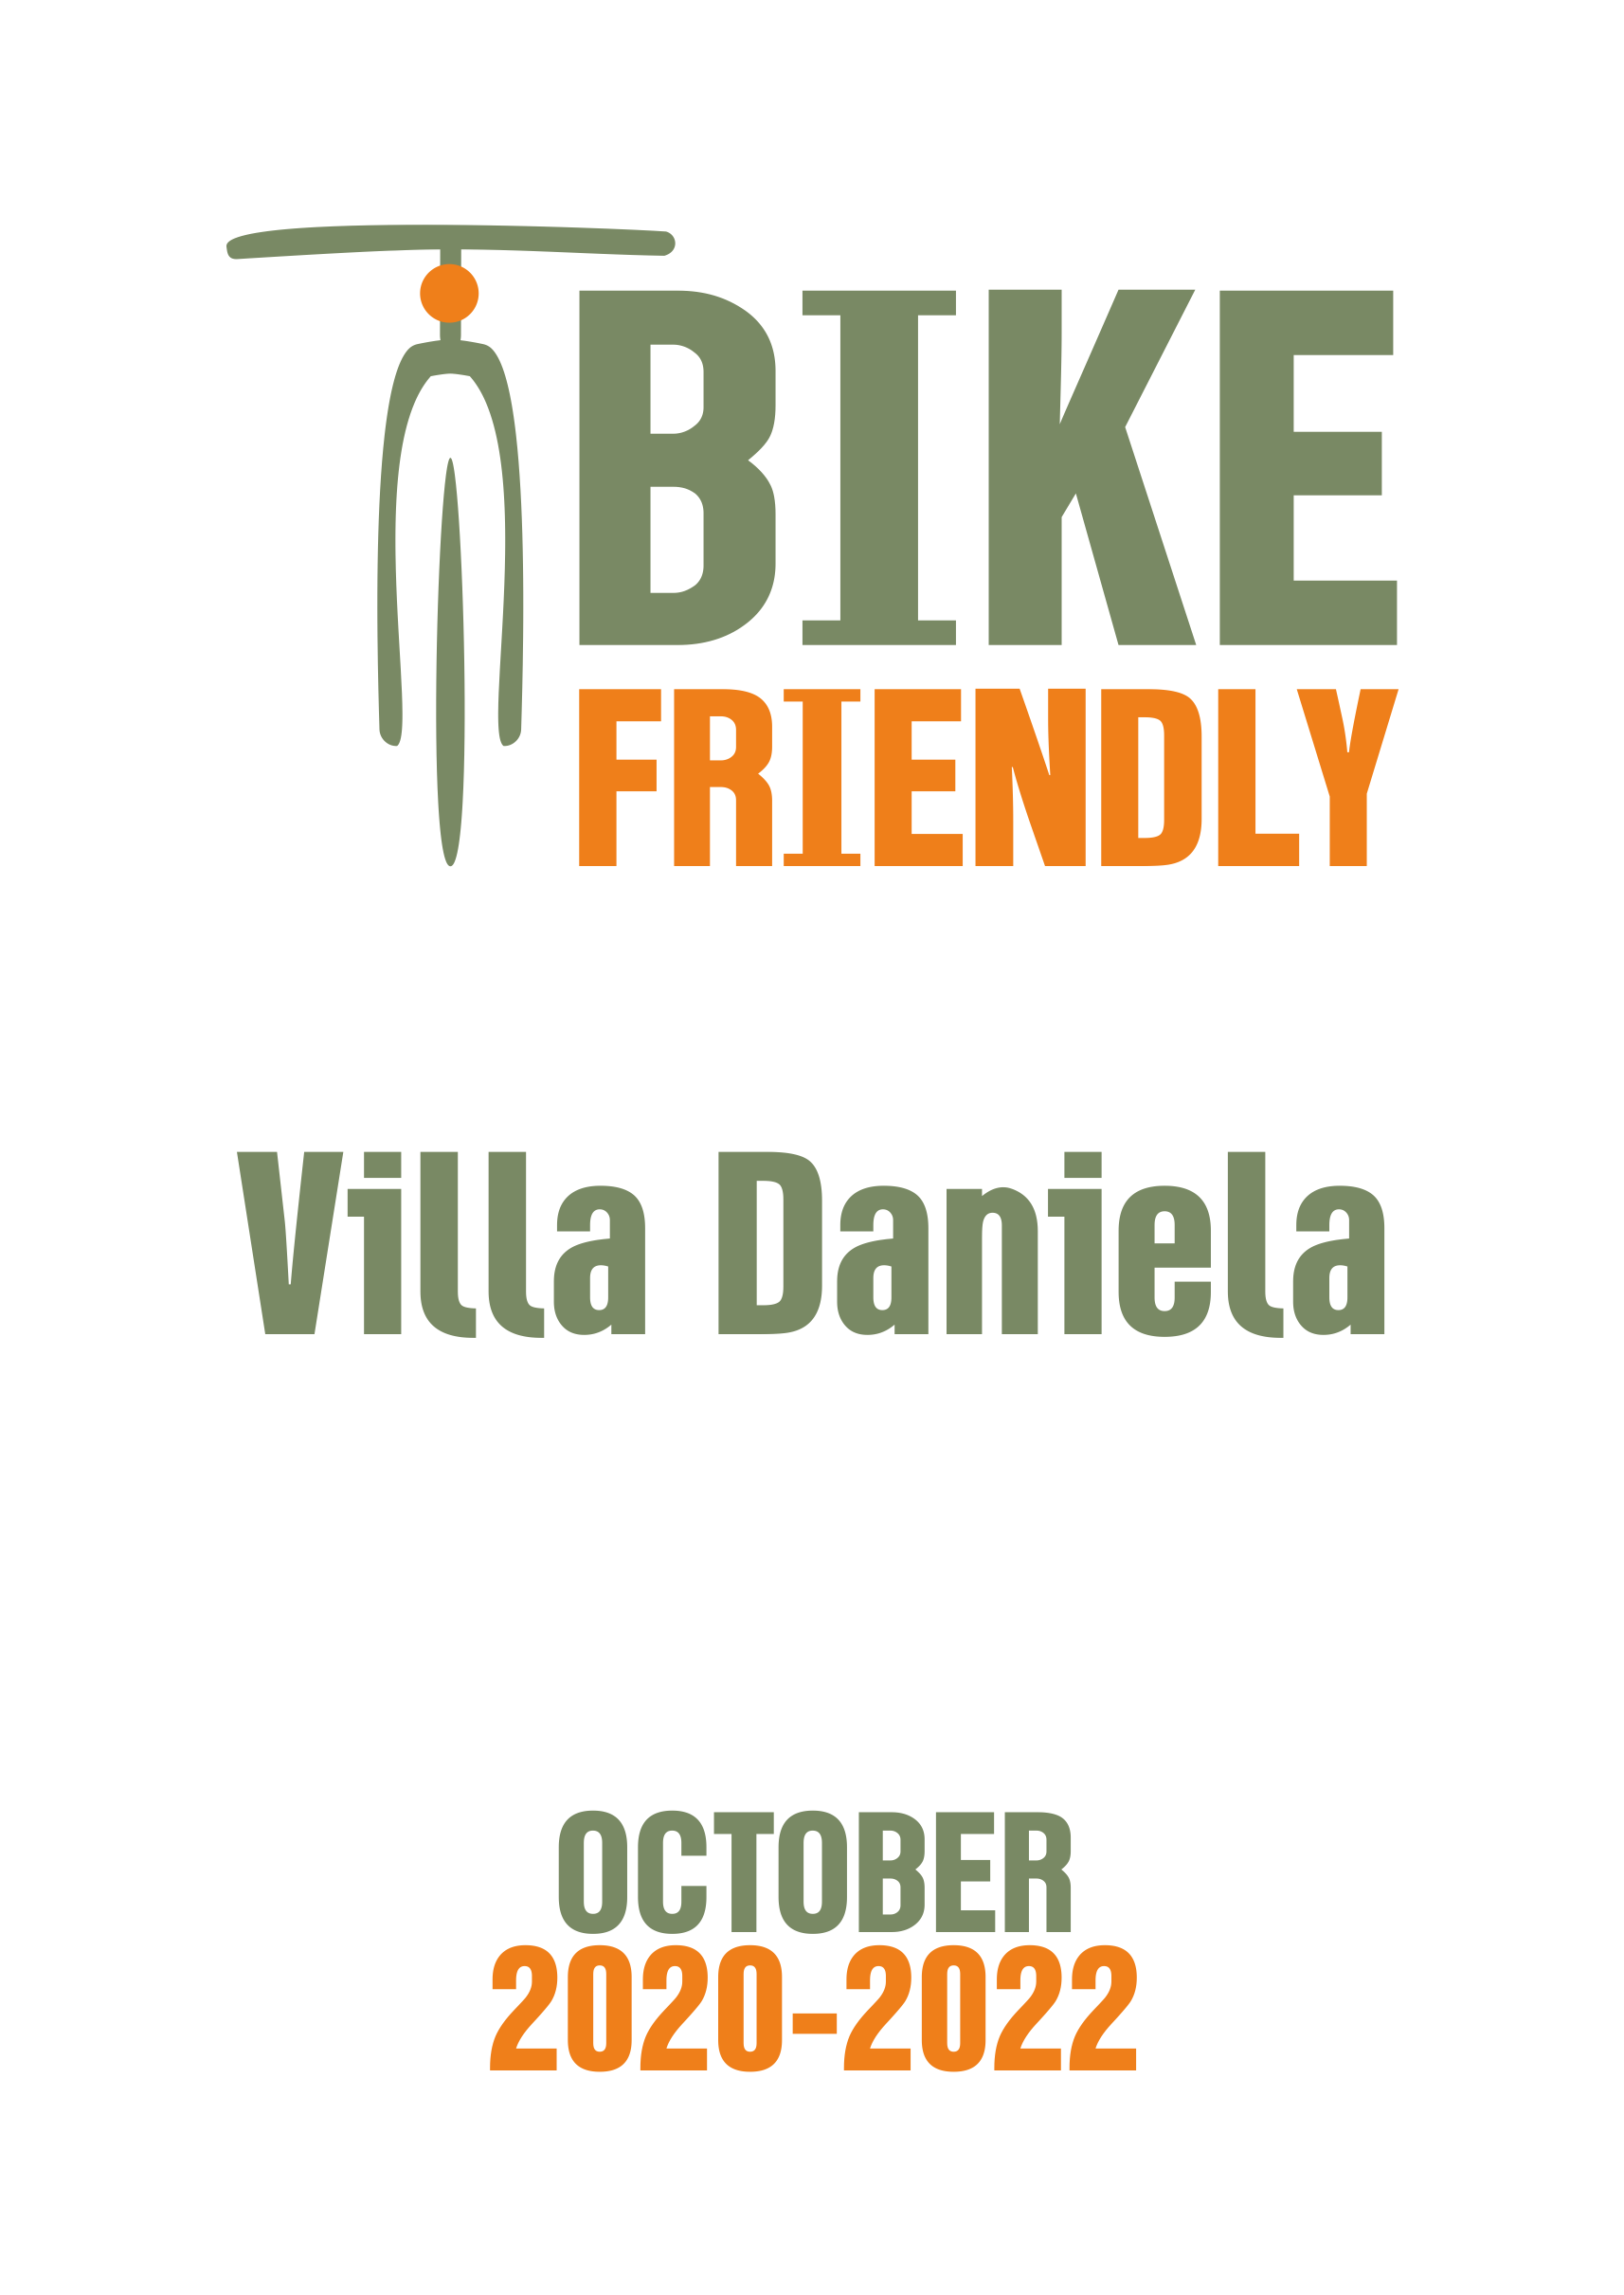 Villa Daniela - Bike Friendly